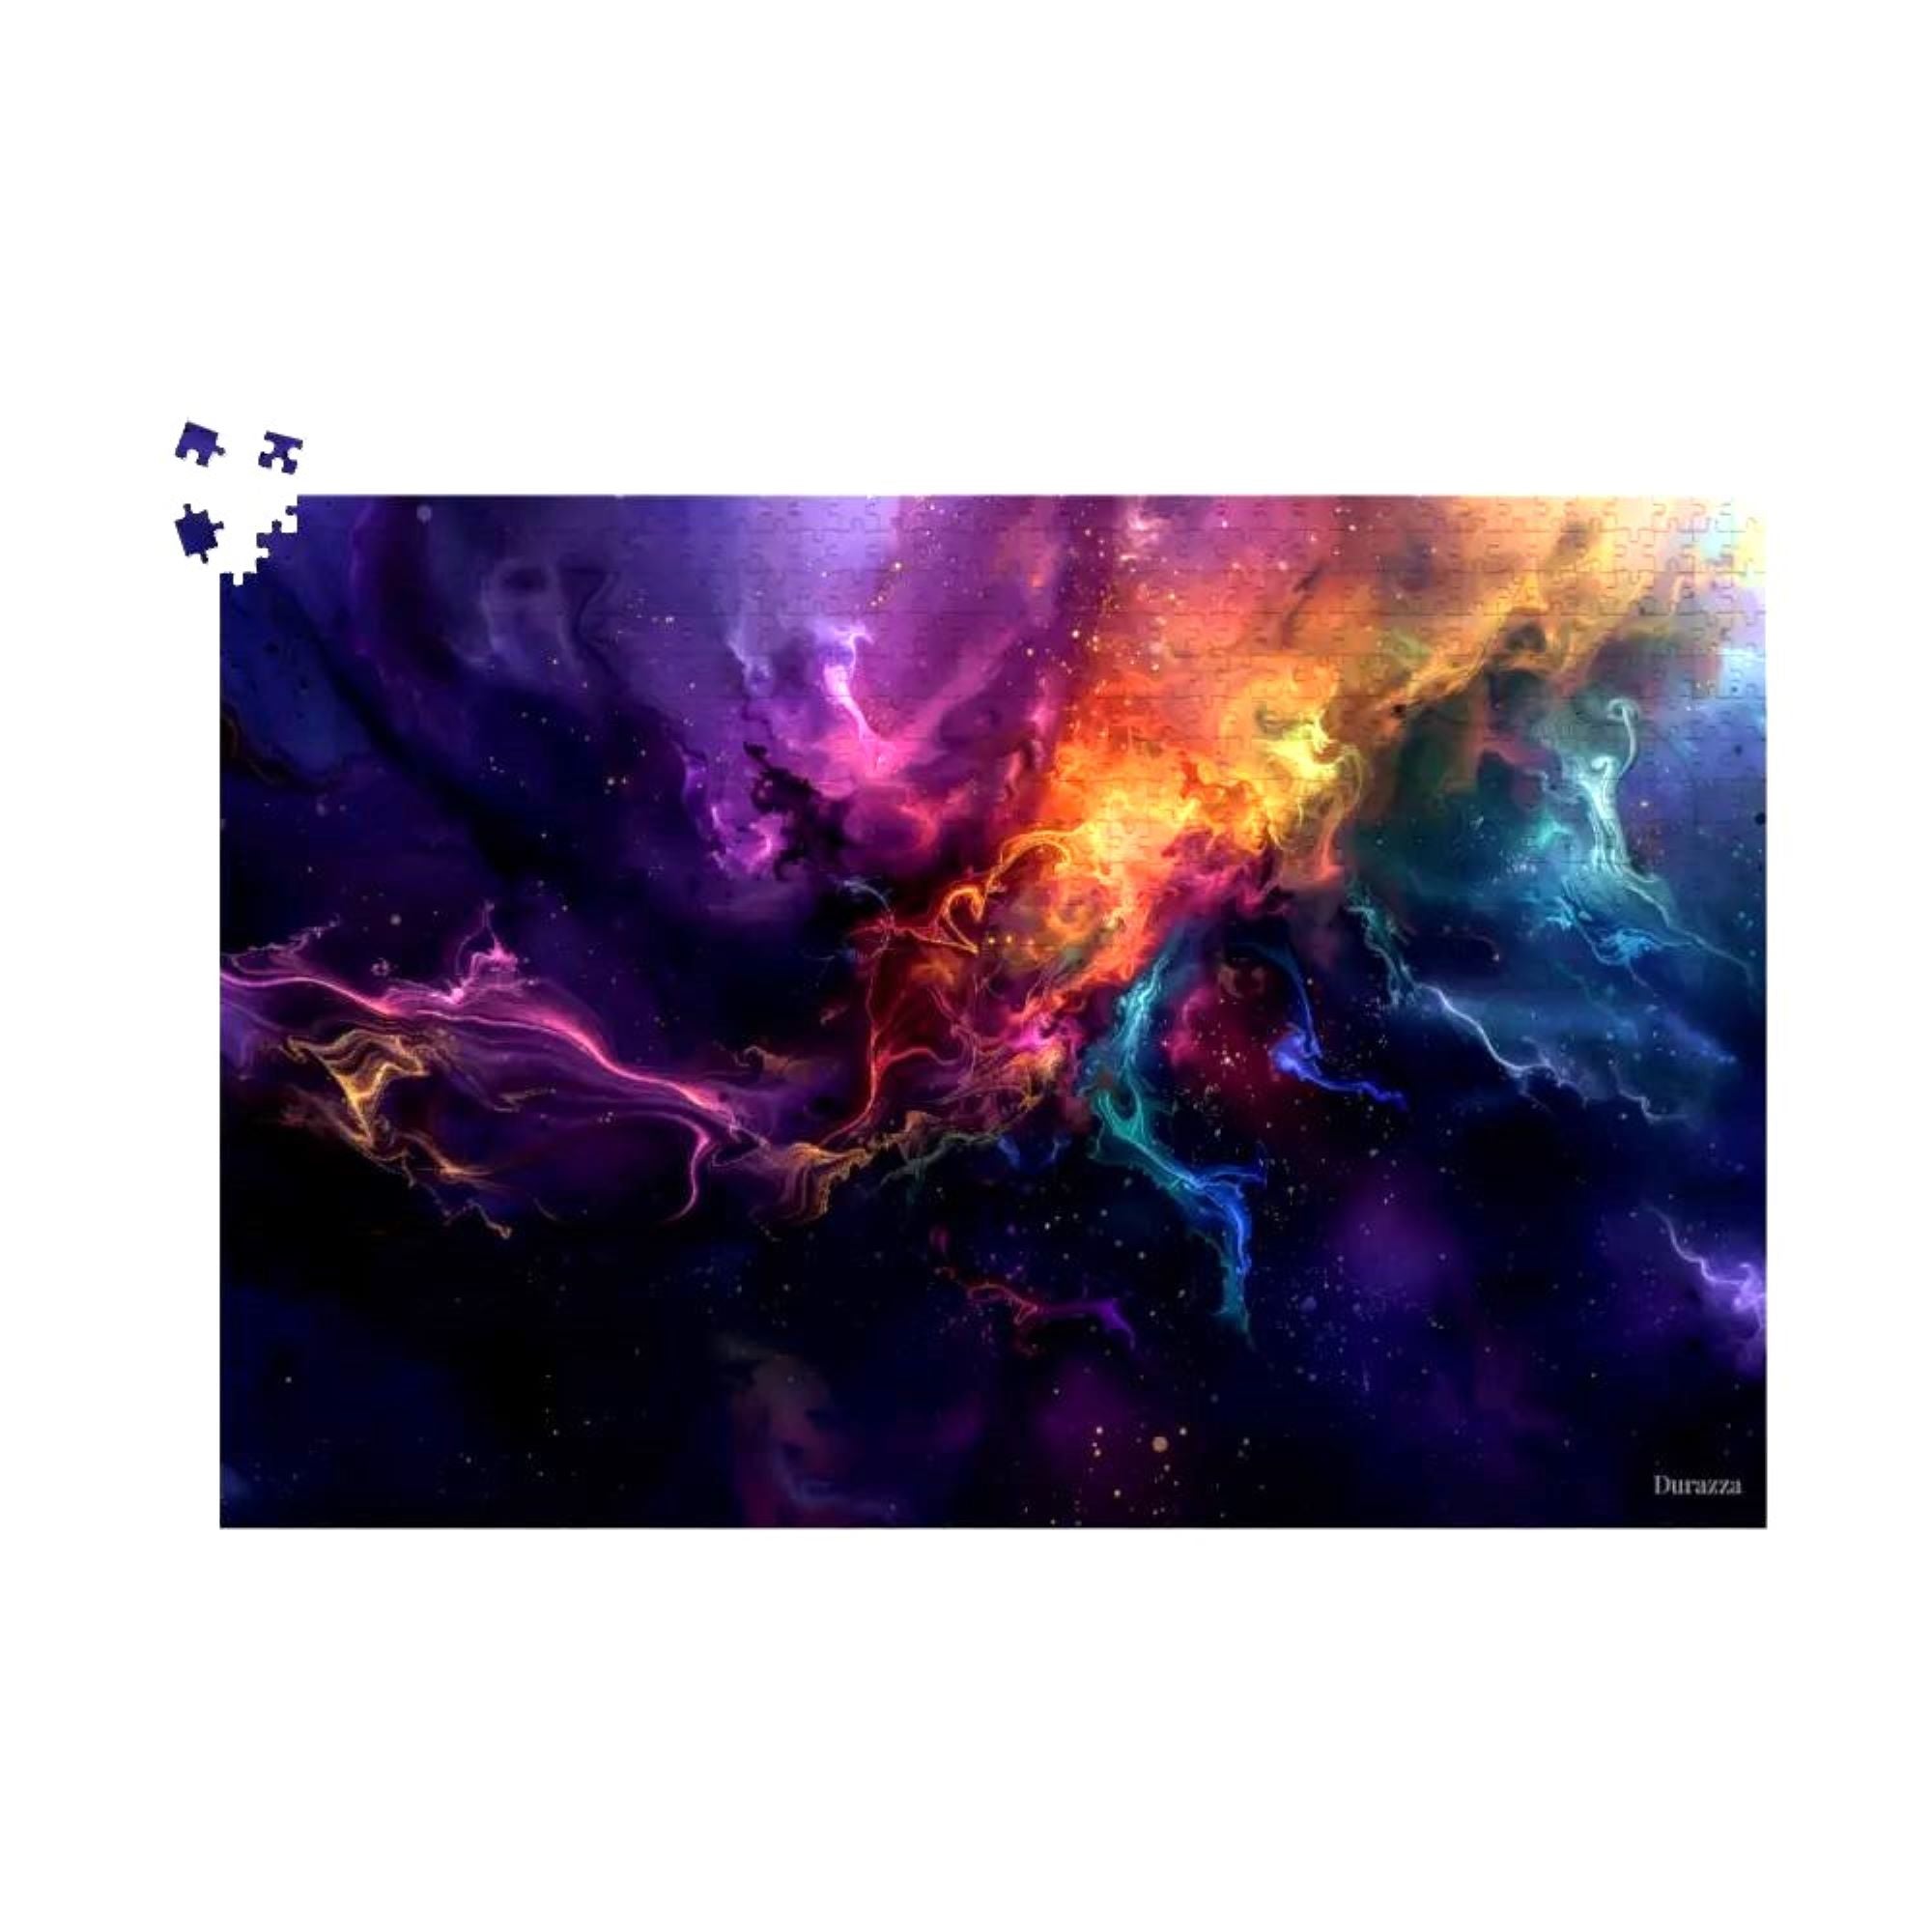 Swirling Galaxy Jigsaw Puzzle 500 or 1000 Piece: Celestial